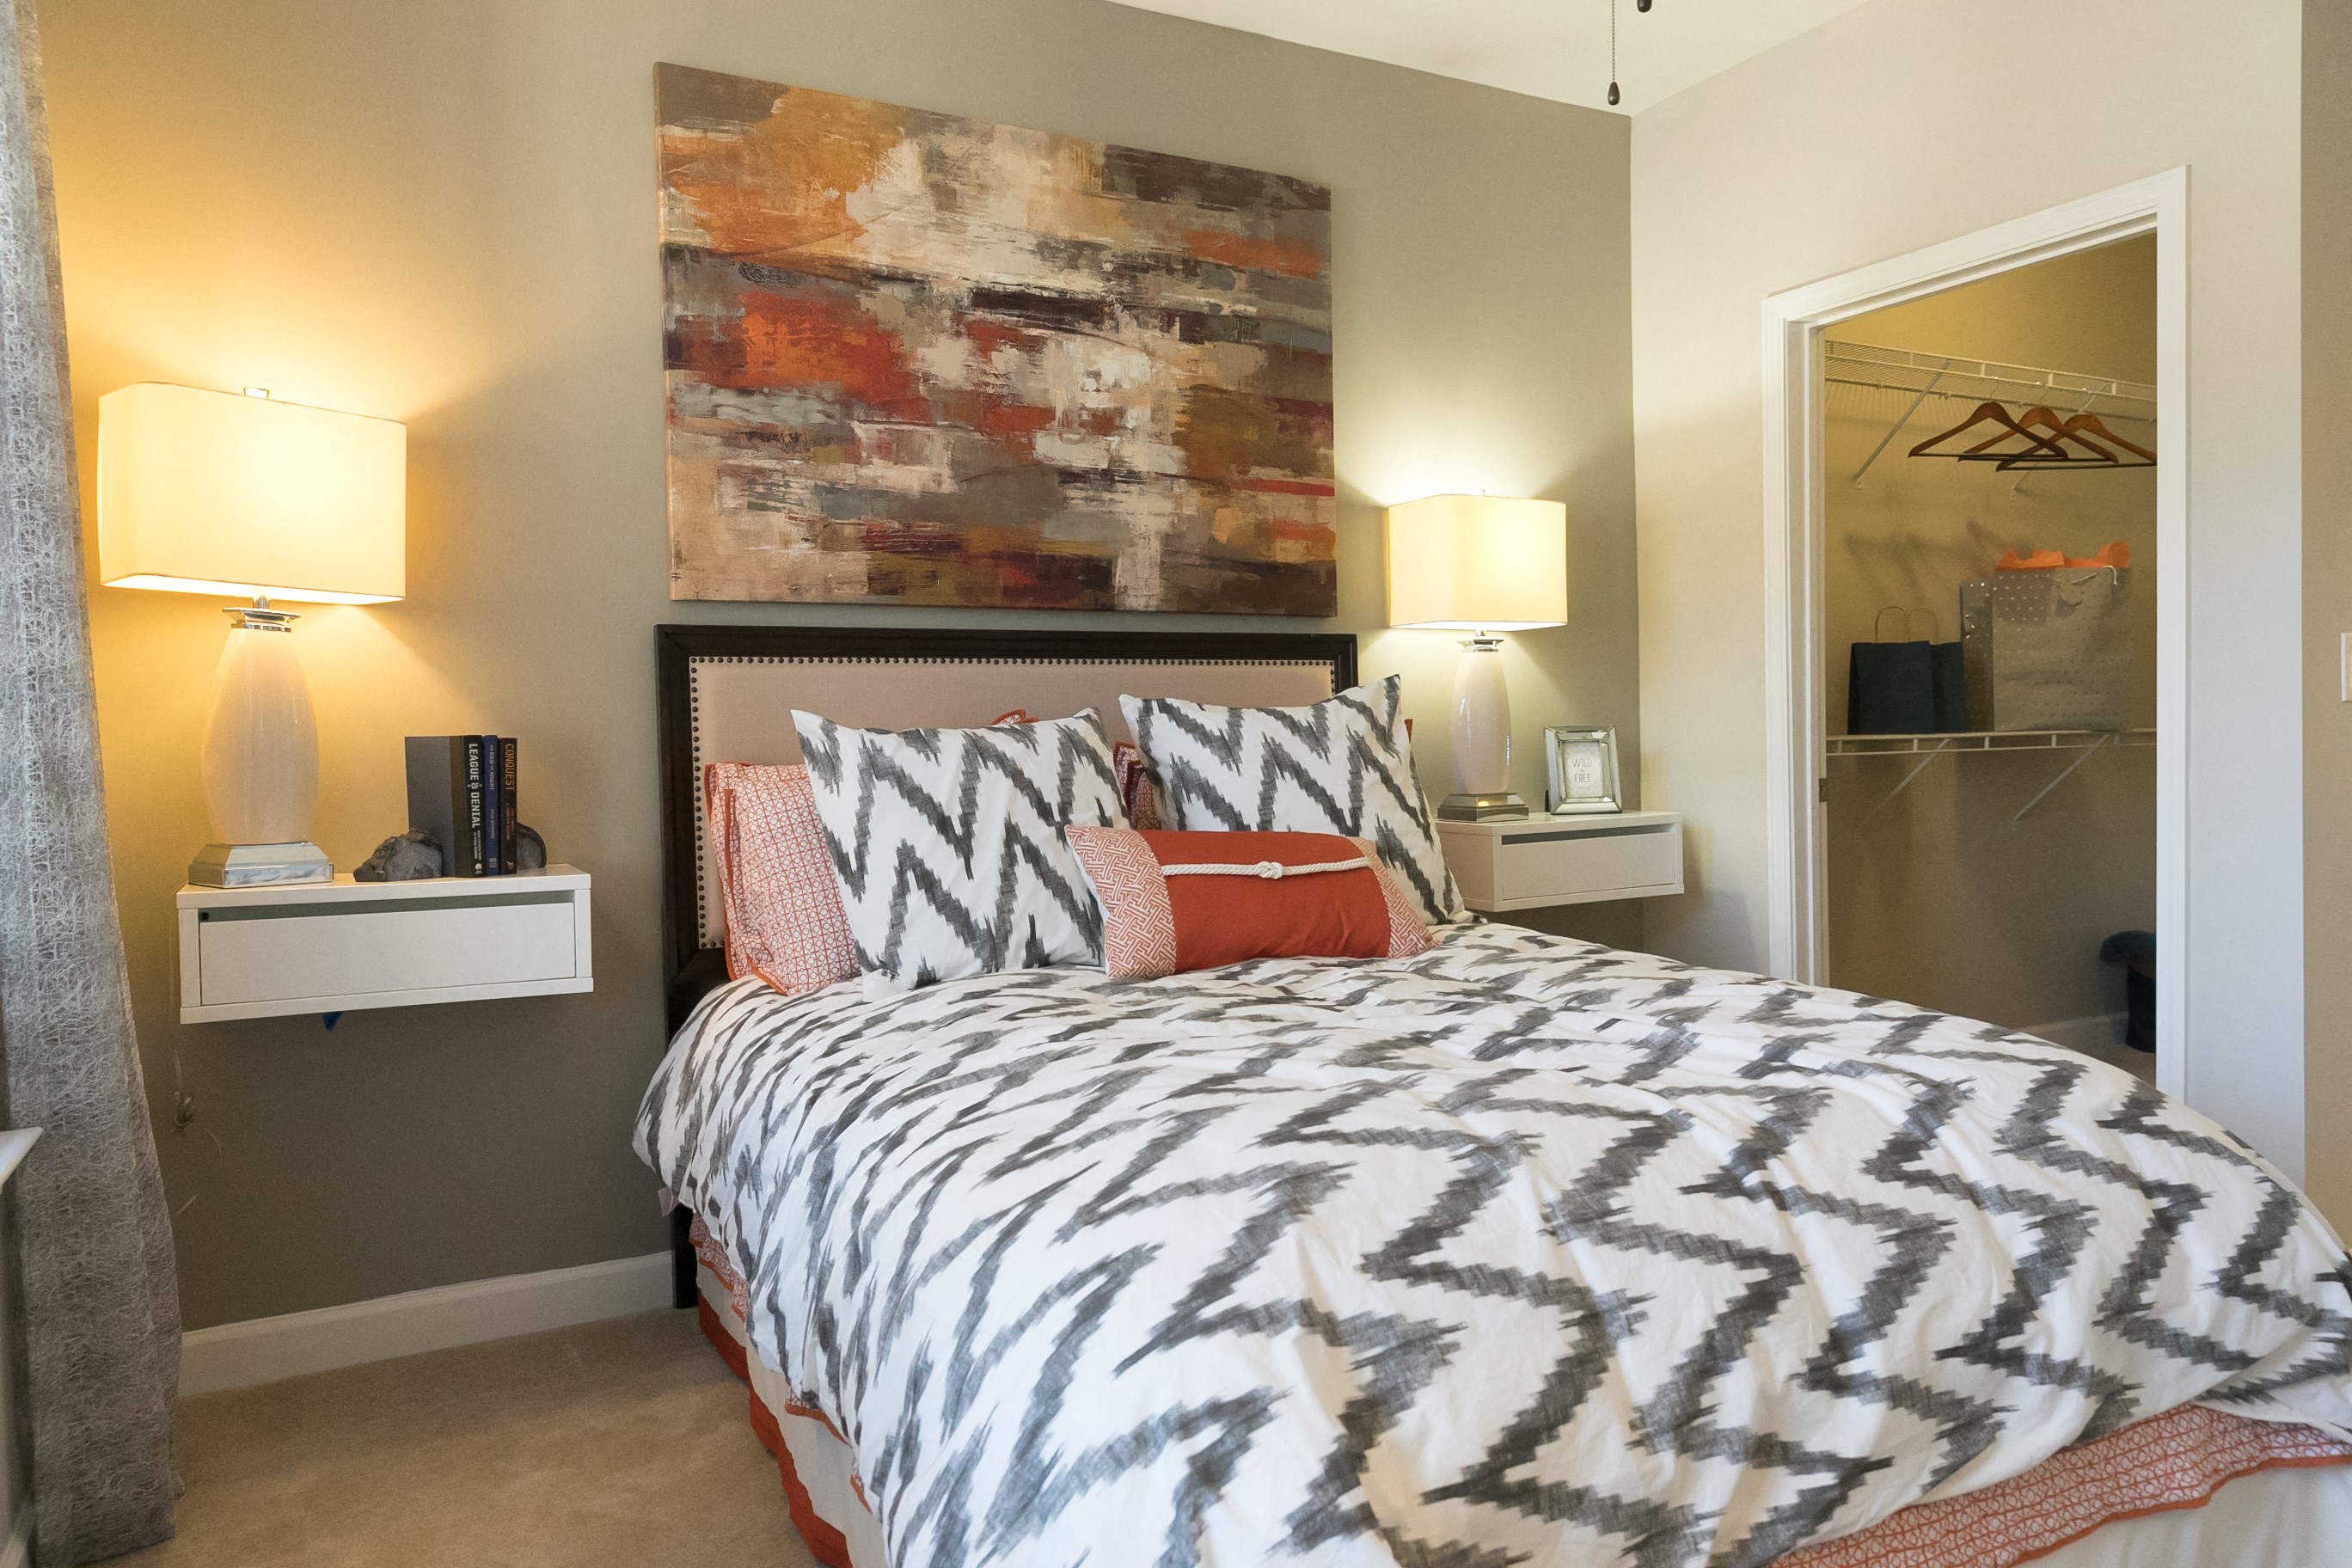 One Bedroom Apartments in Johns Creek, GA - The Regency at Johns Creek Walk Apartments Bedroom with Carpet Flooring